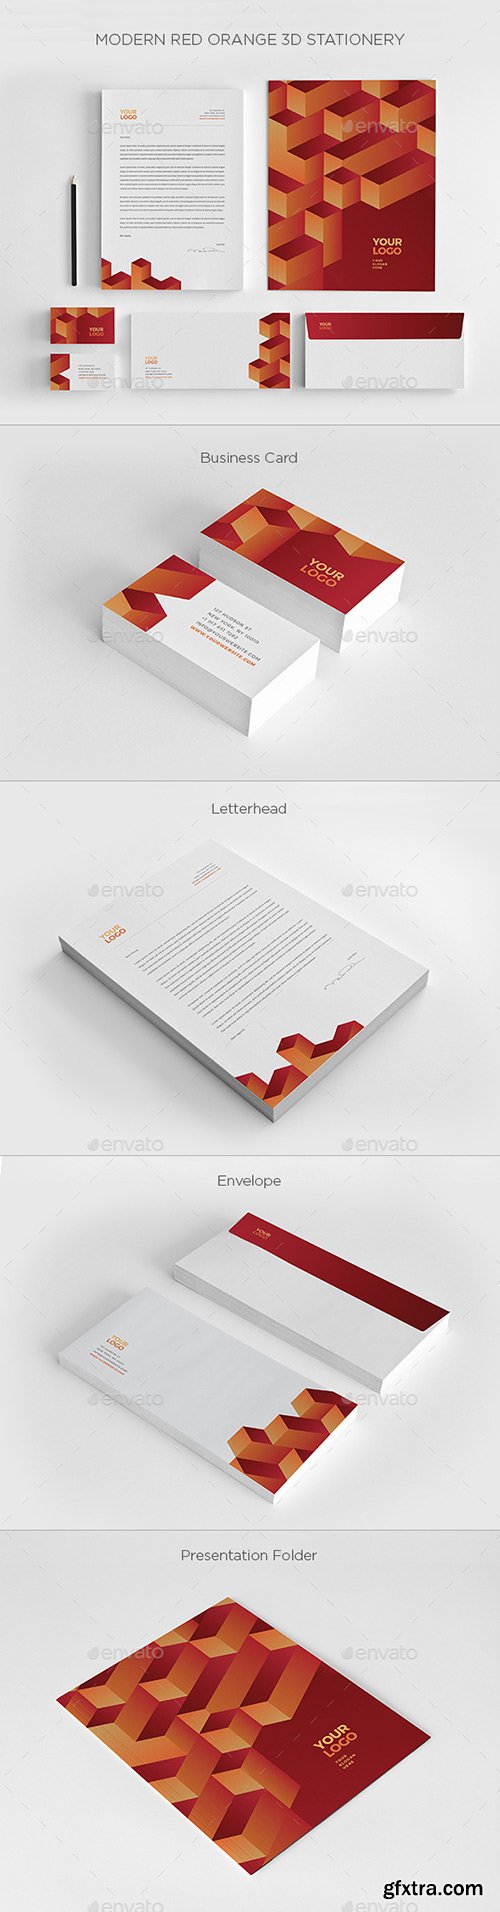 Graphicriver - Modern Red Orange 3D Stationery 20279000